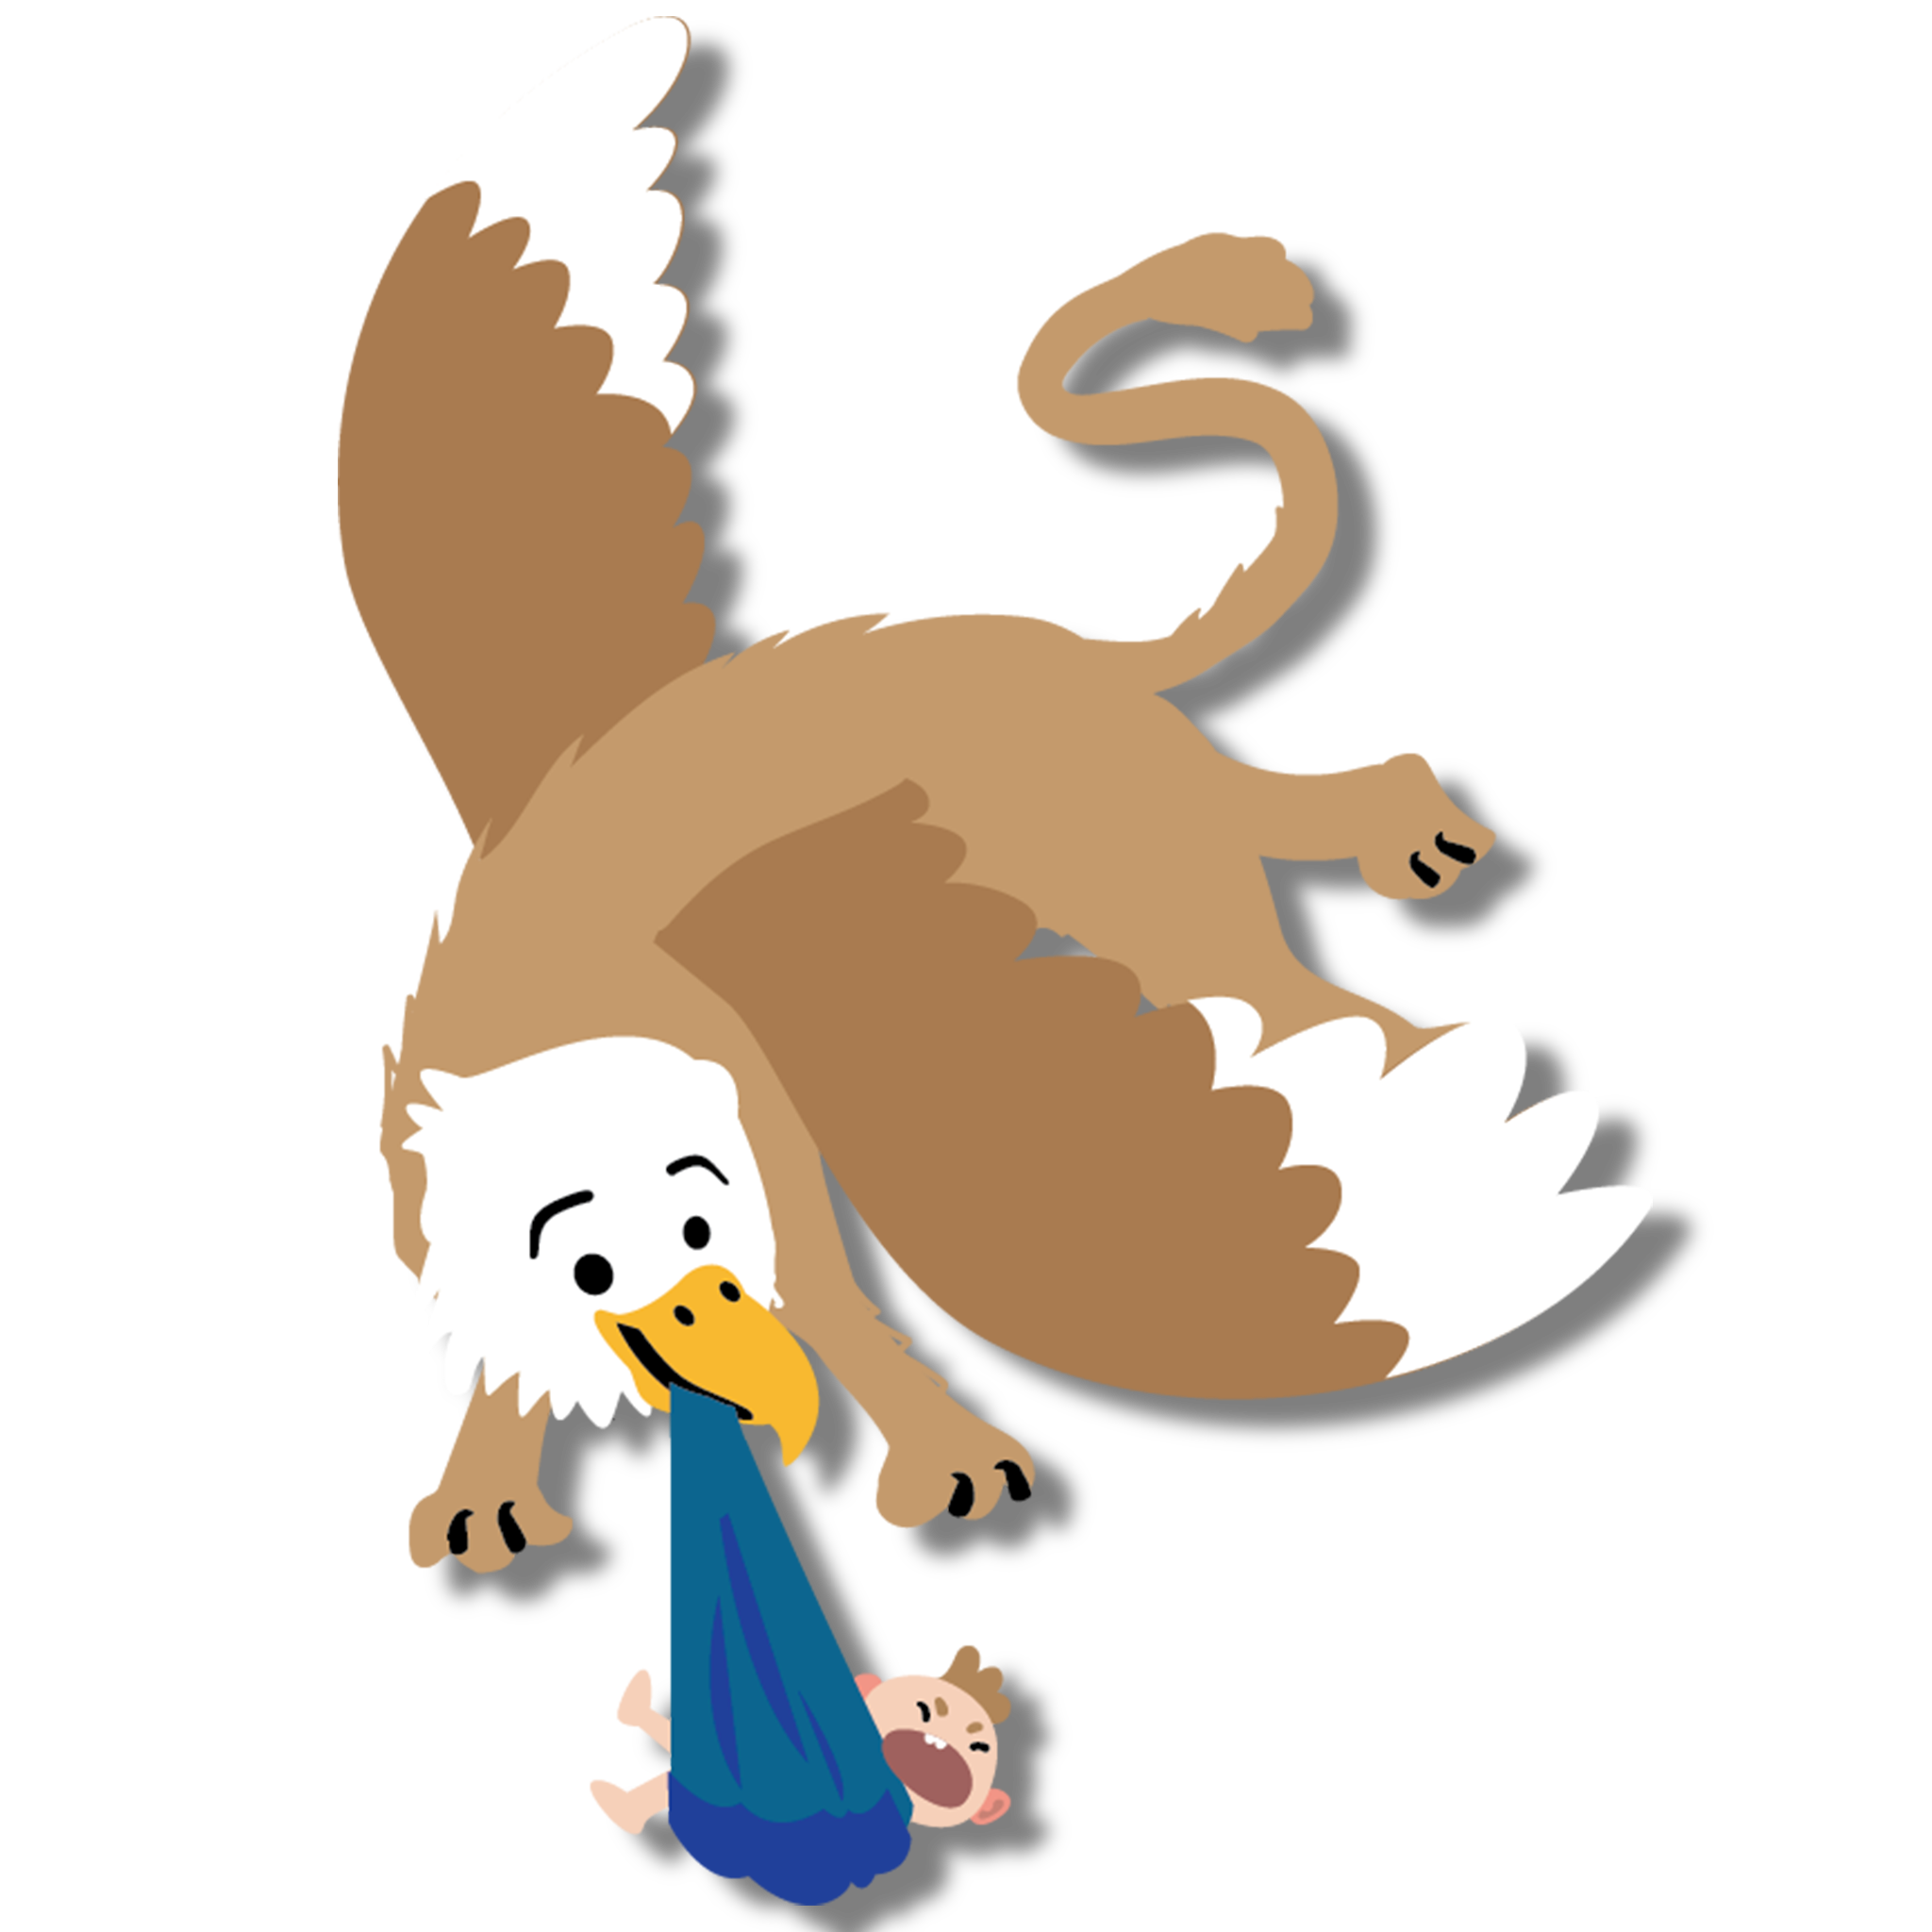 Griffon holding a baby like a stork